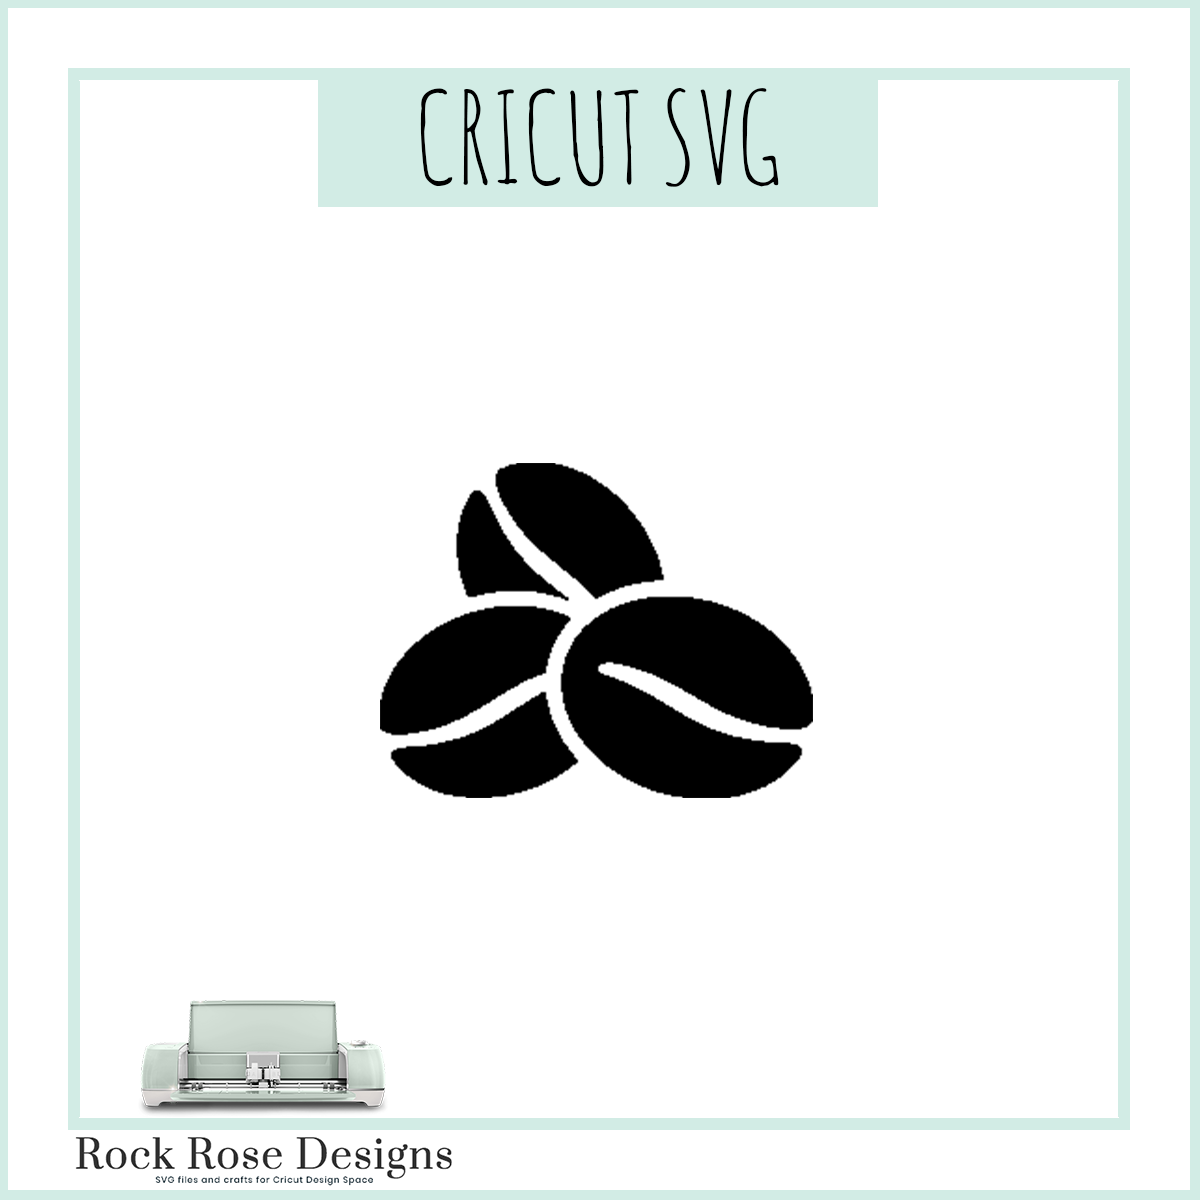 Download Coffee Beans Svg Cut File Rock Rose Designs Rock Rose Designs